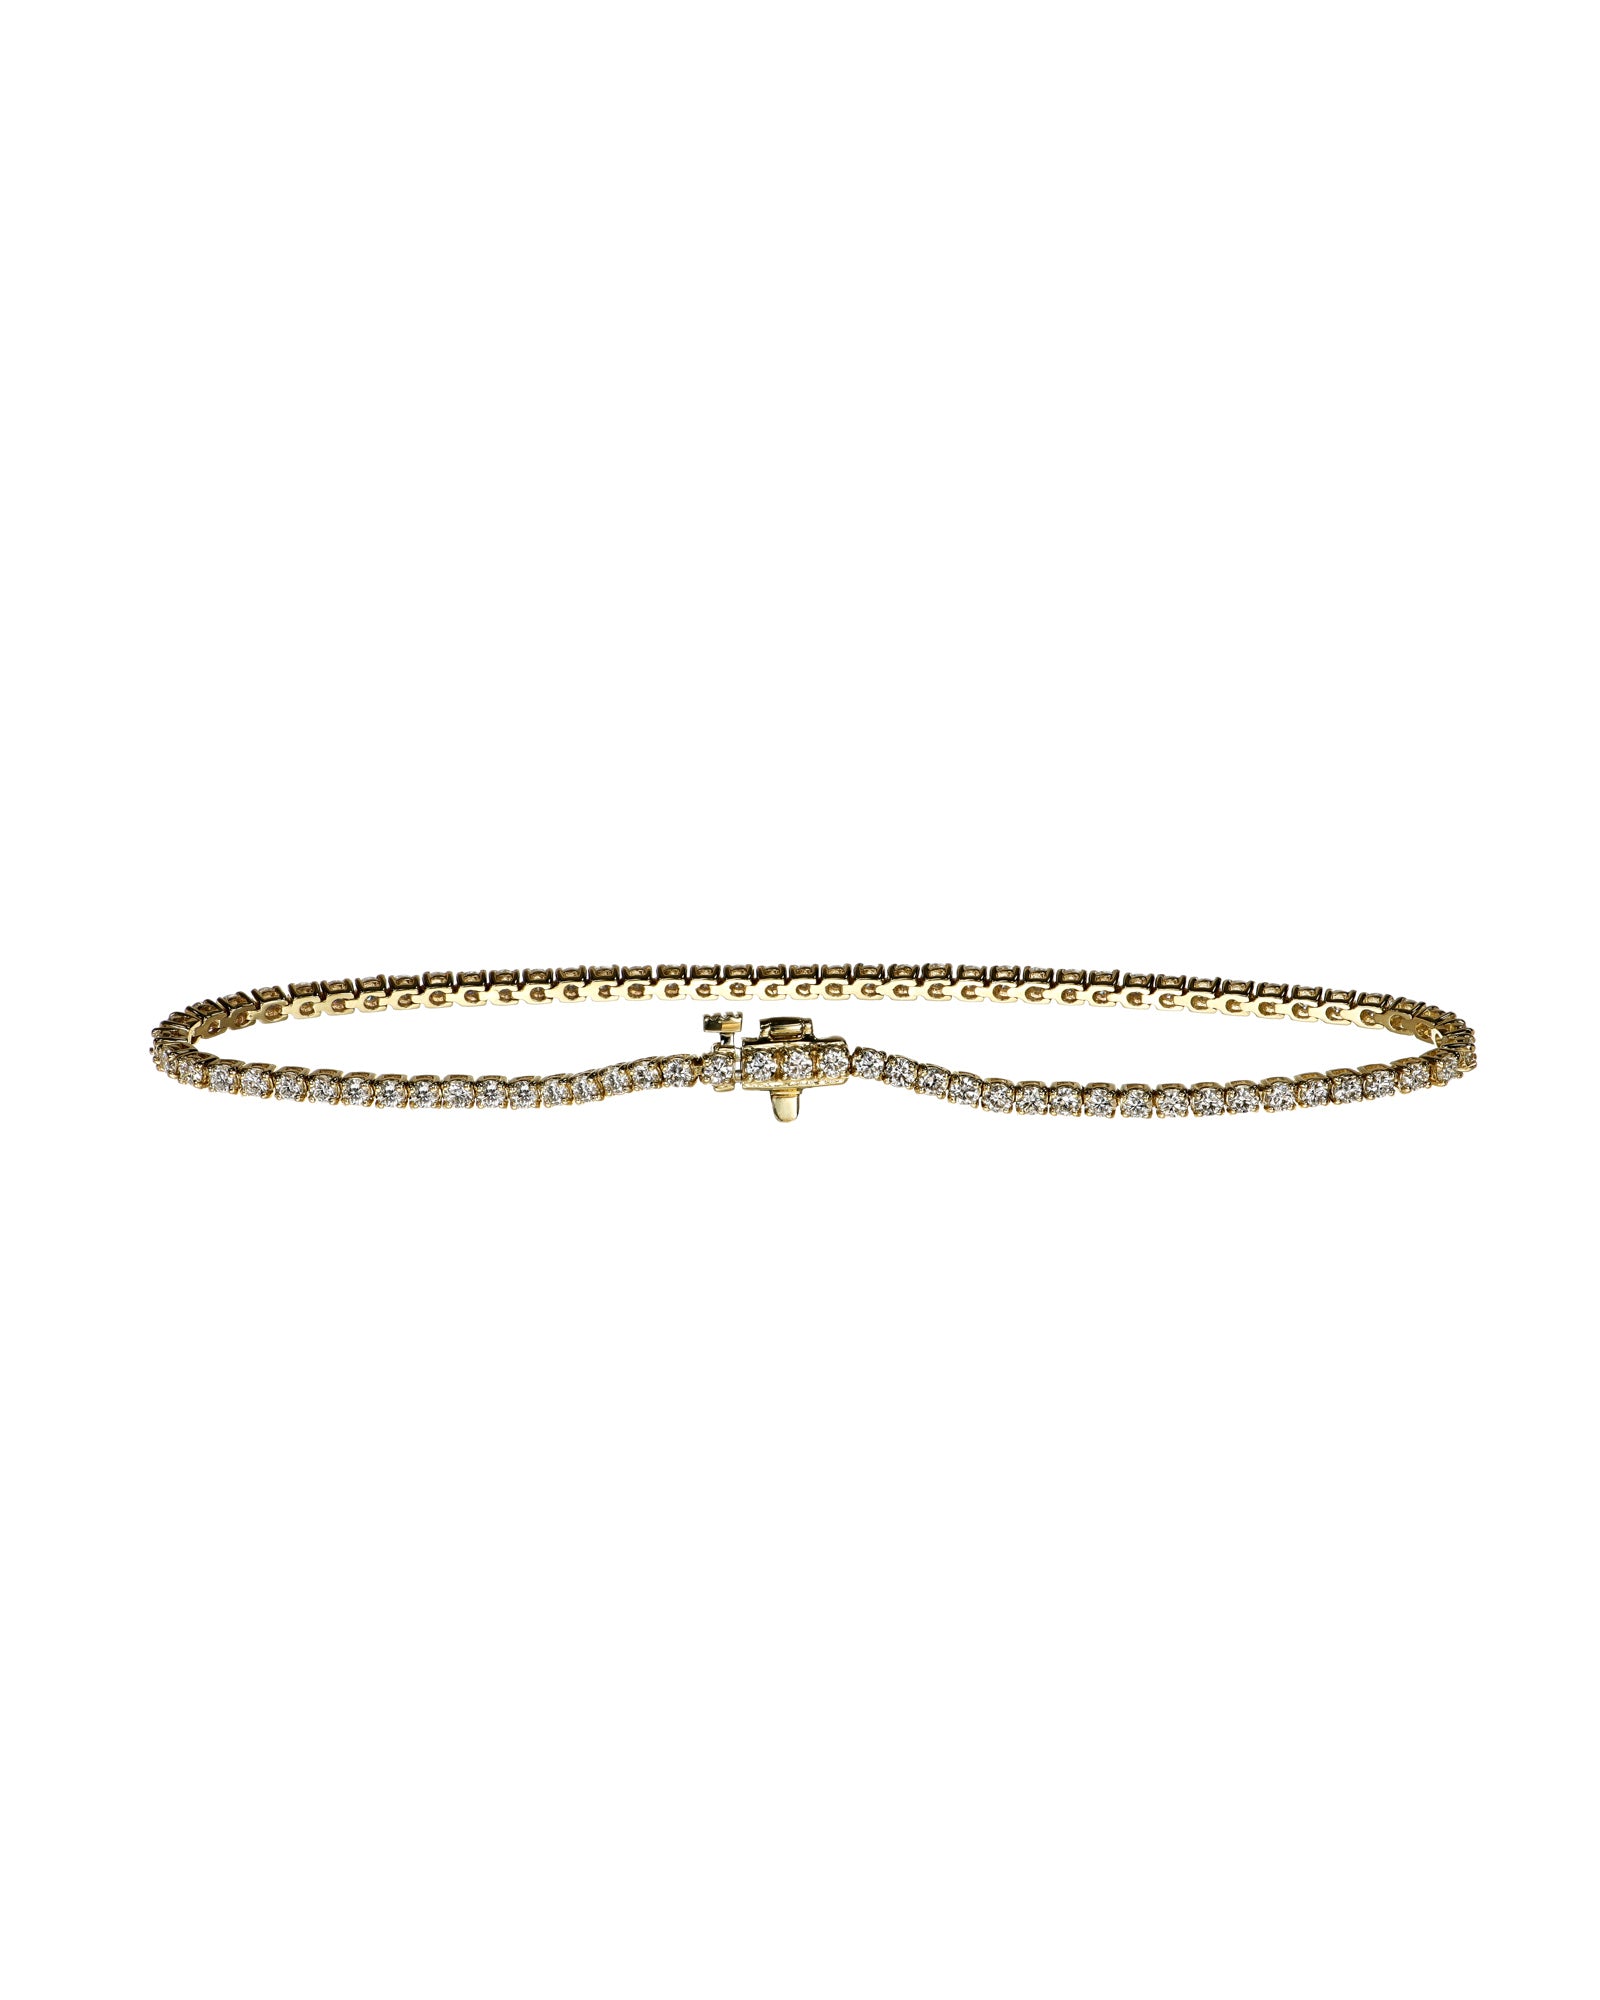 1.00ctw Yellow gold diamond tennis bracelet